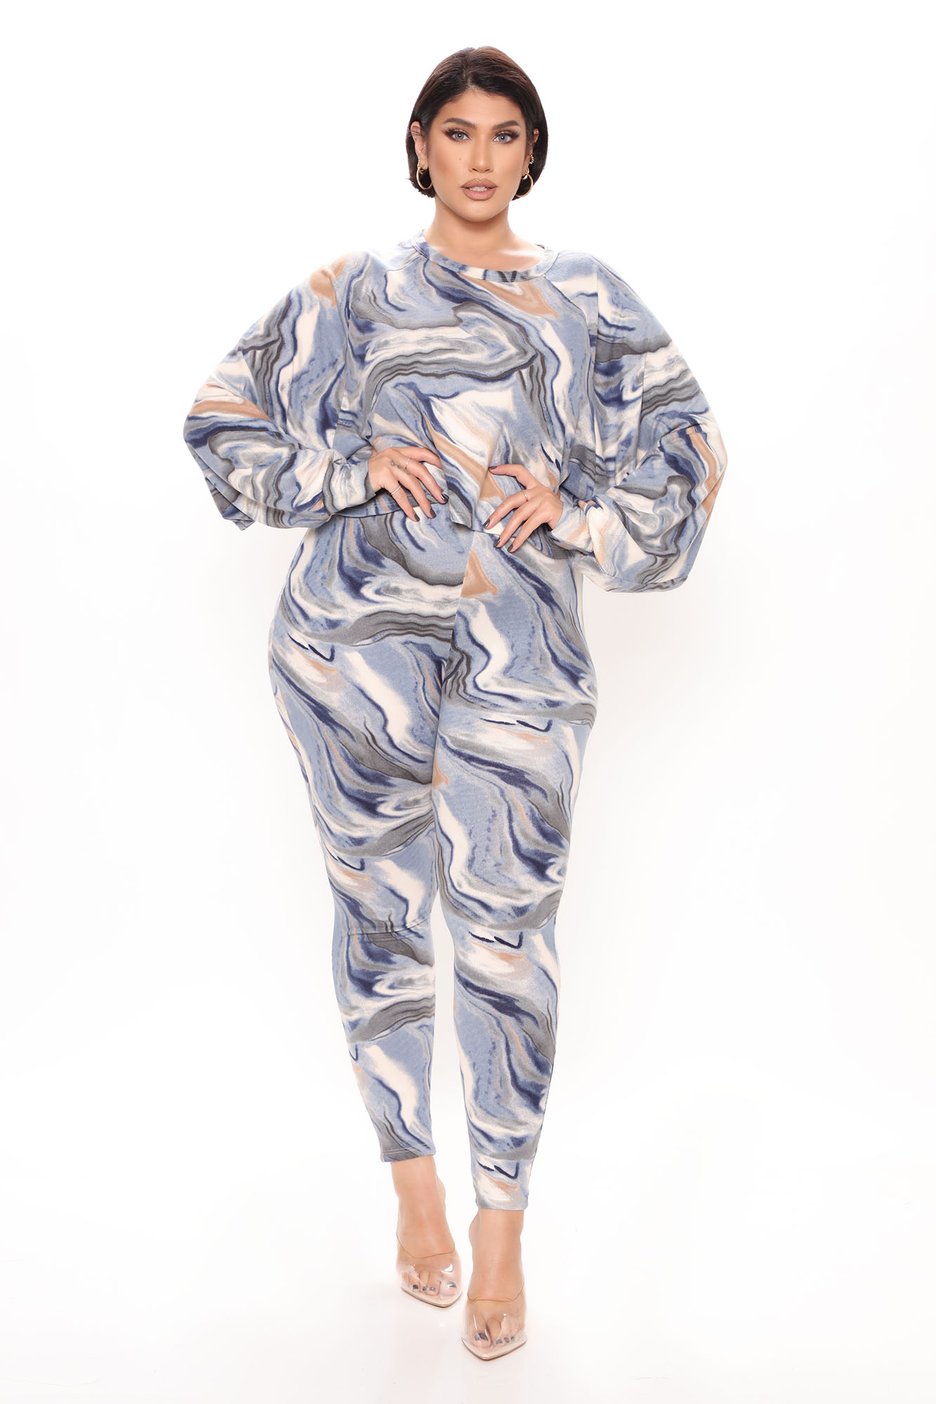 Reginae Carter Wears Fashion Nova Blue Marble Print Crop Top and Legging Set 4